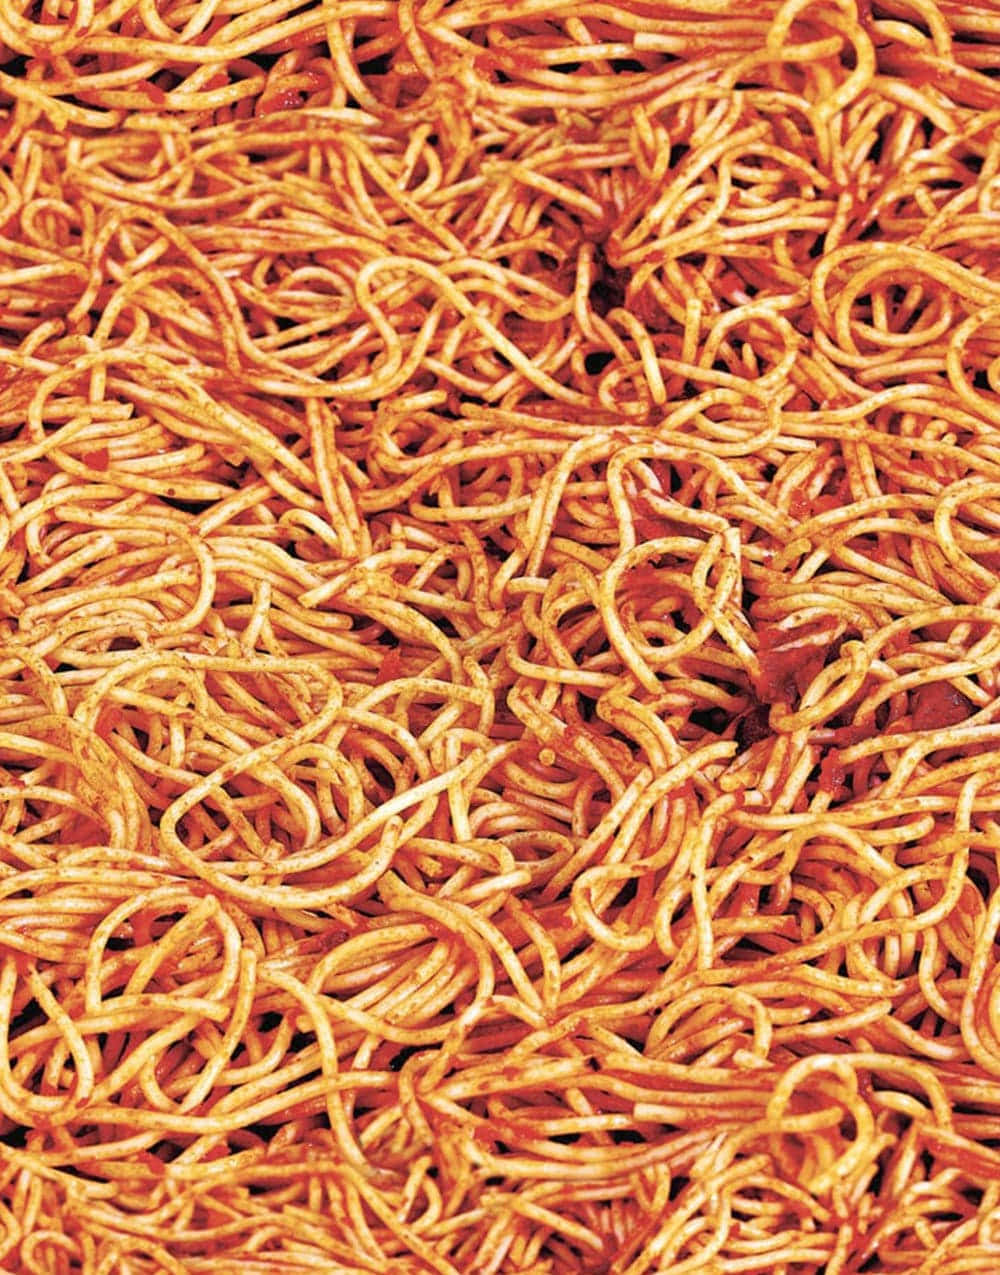 Spaghetti 1000 X 1275 Wallpaper